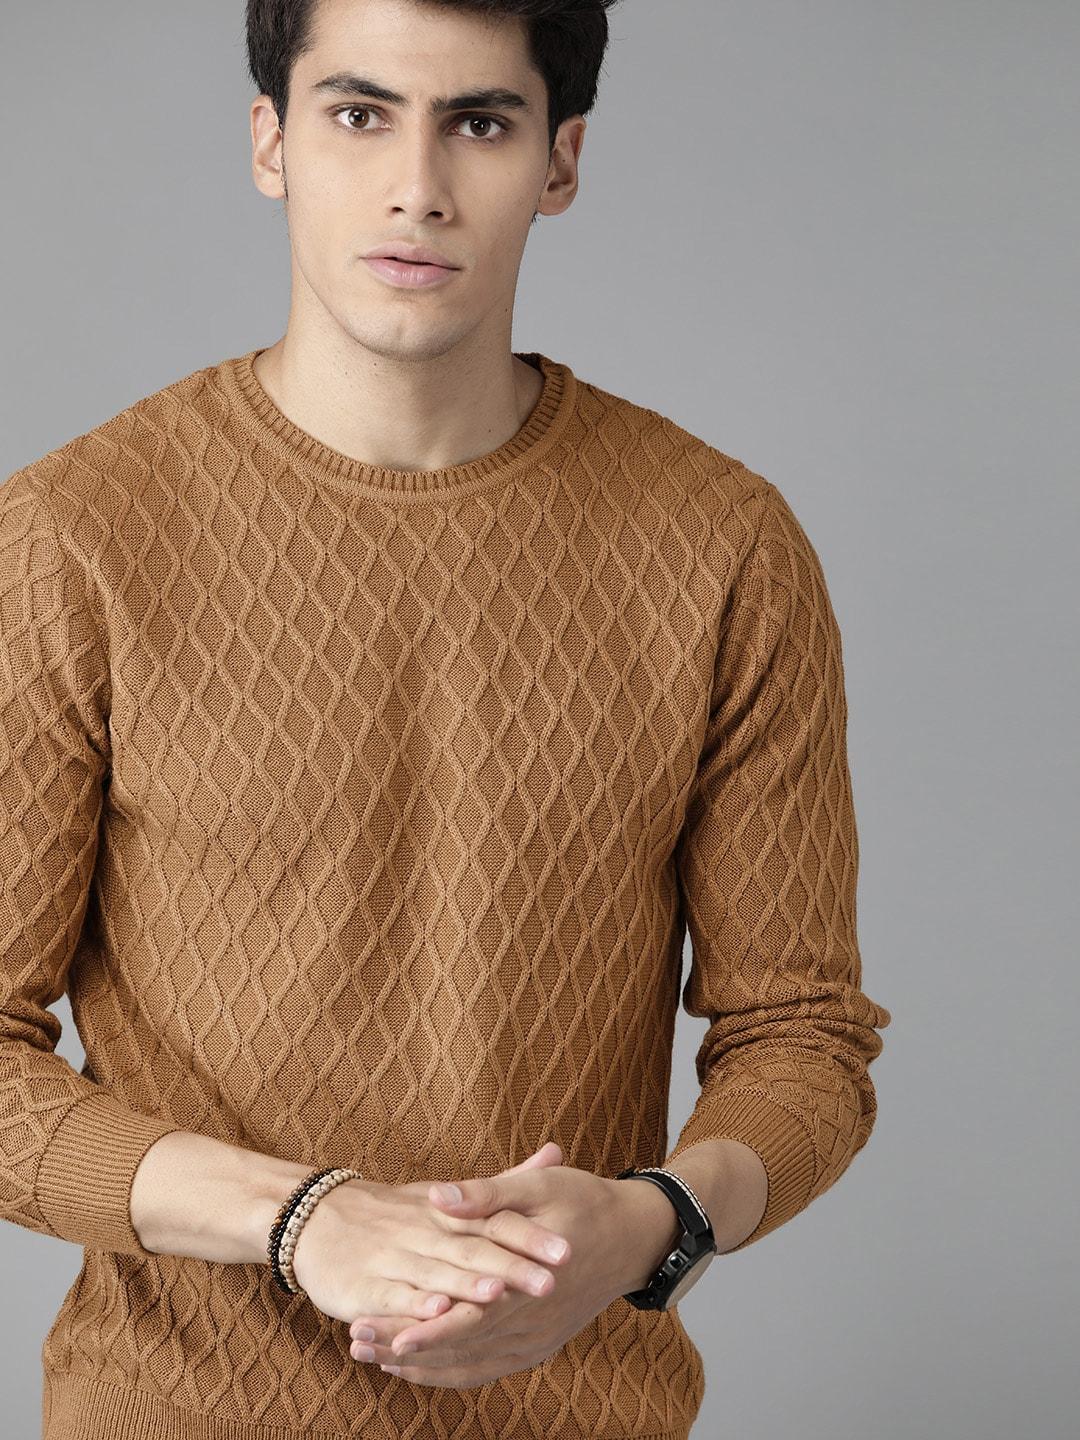 roadster-men-brown-self-designed-pullover-sweater